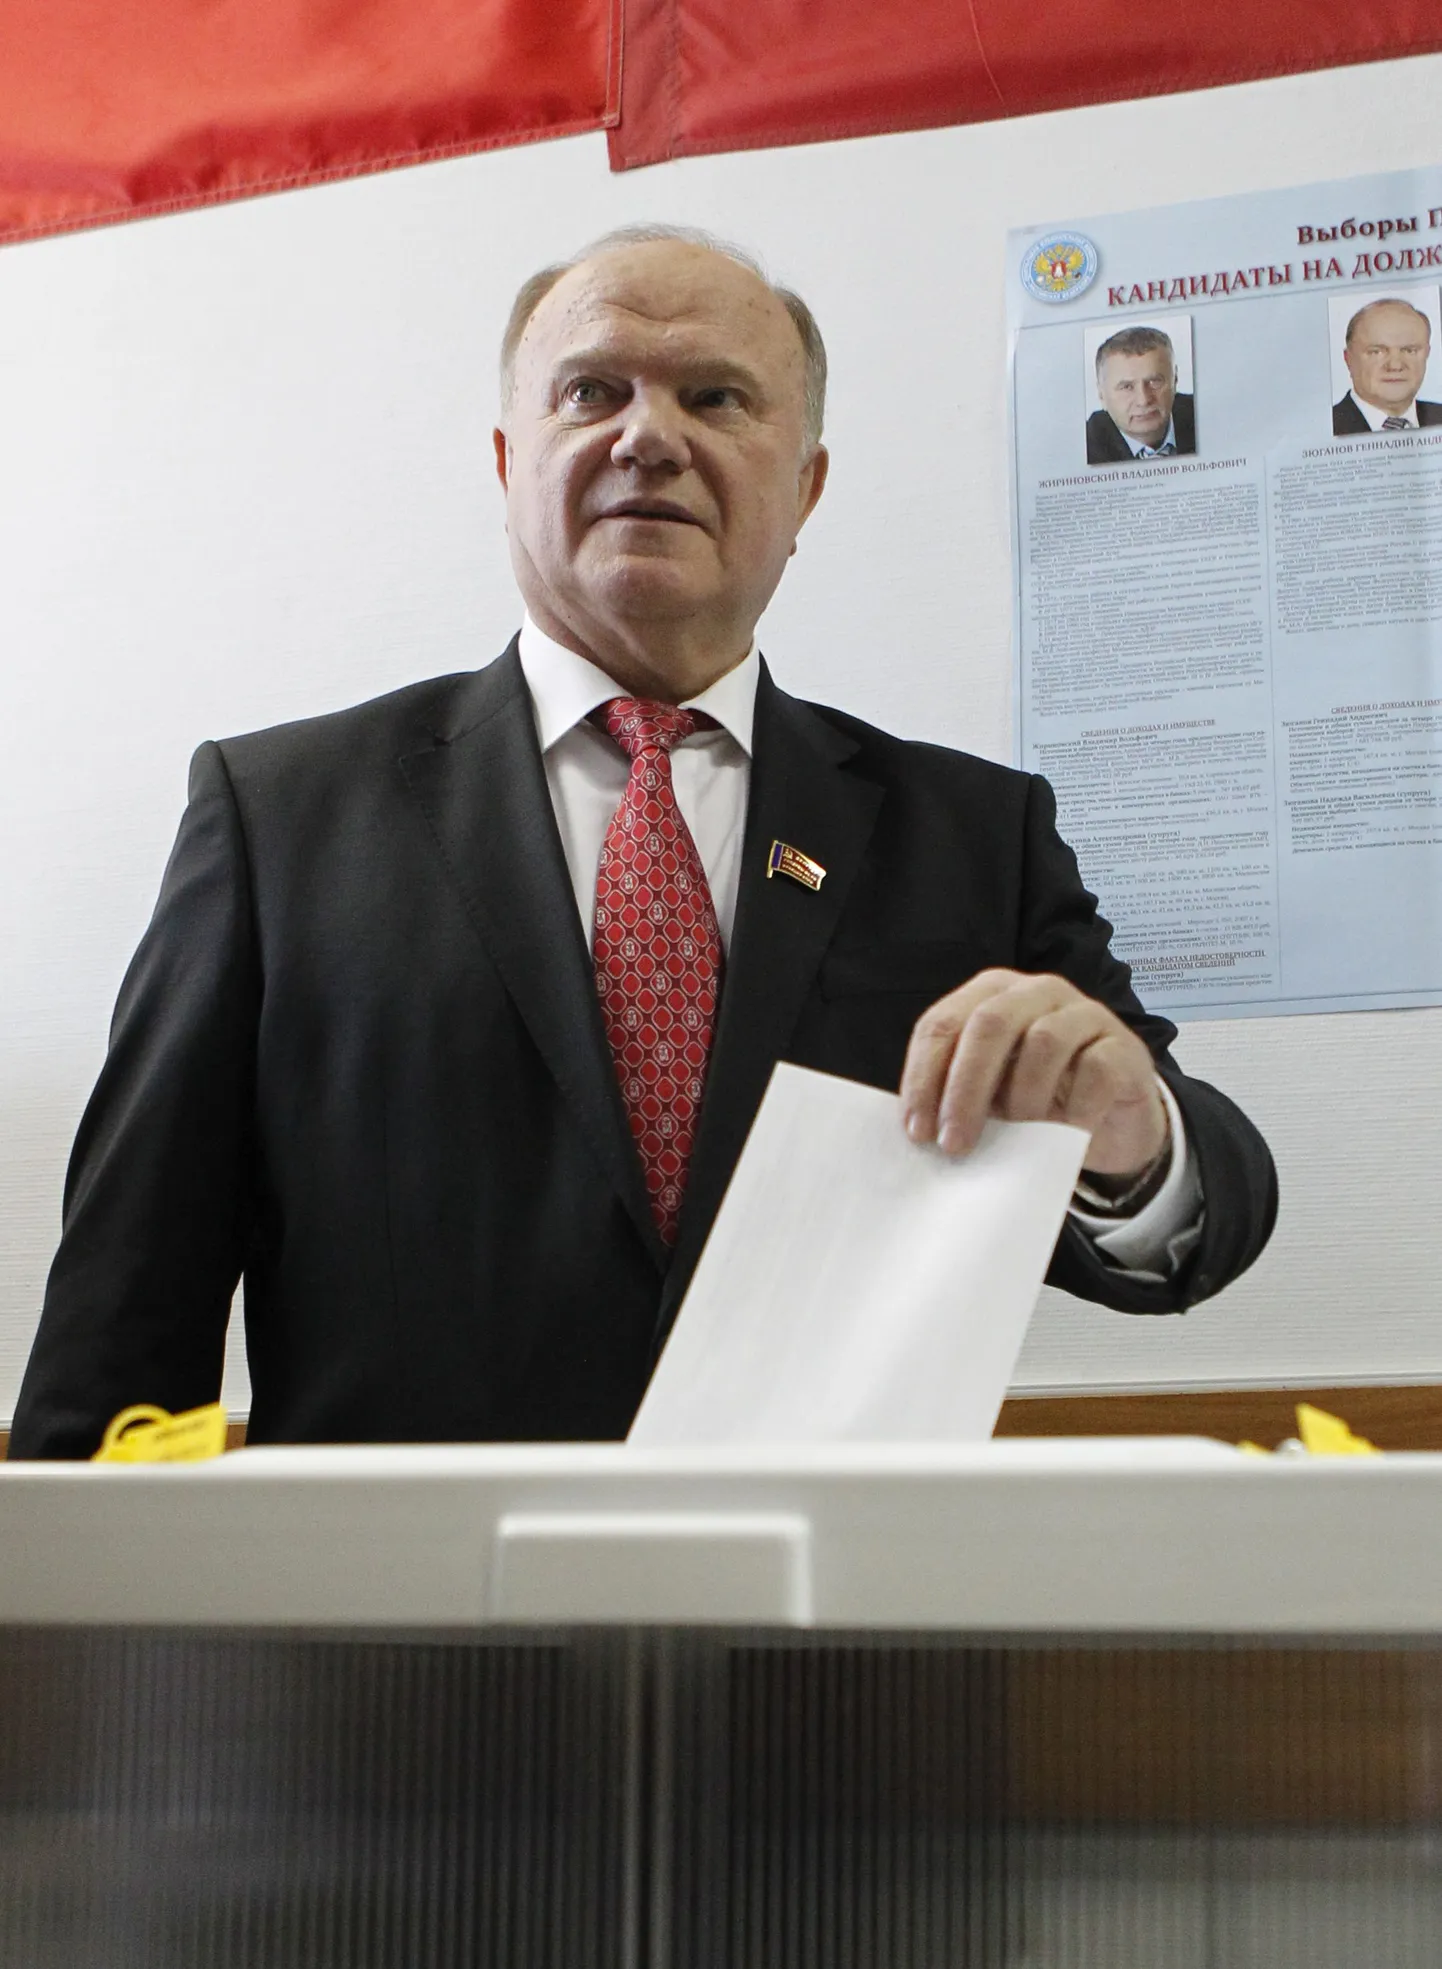 Генадий Зюганов на выборах президента РФ